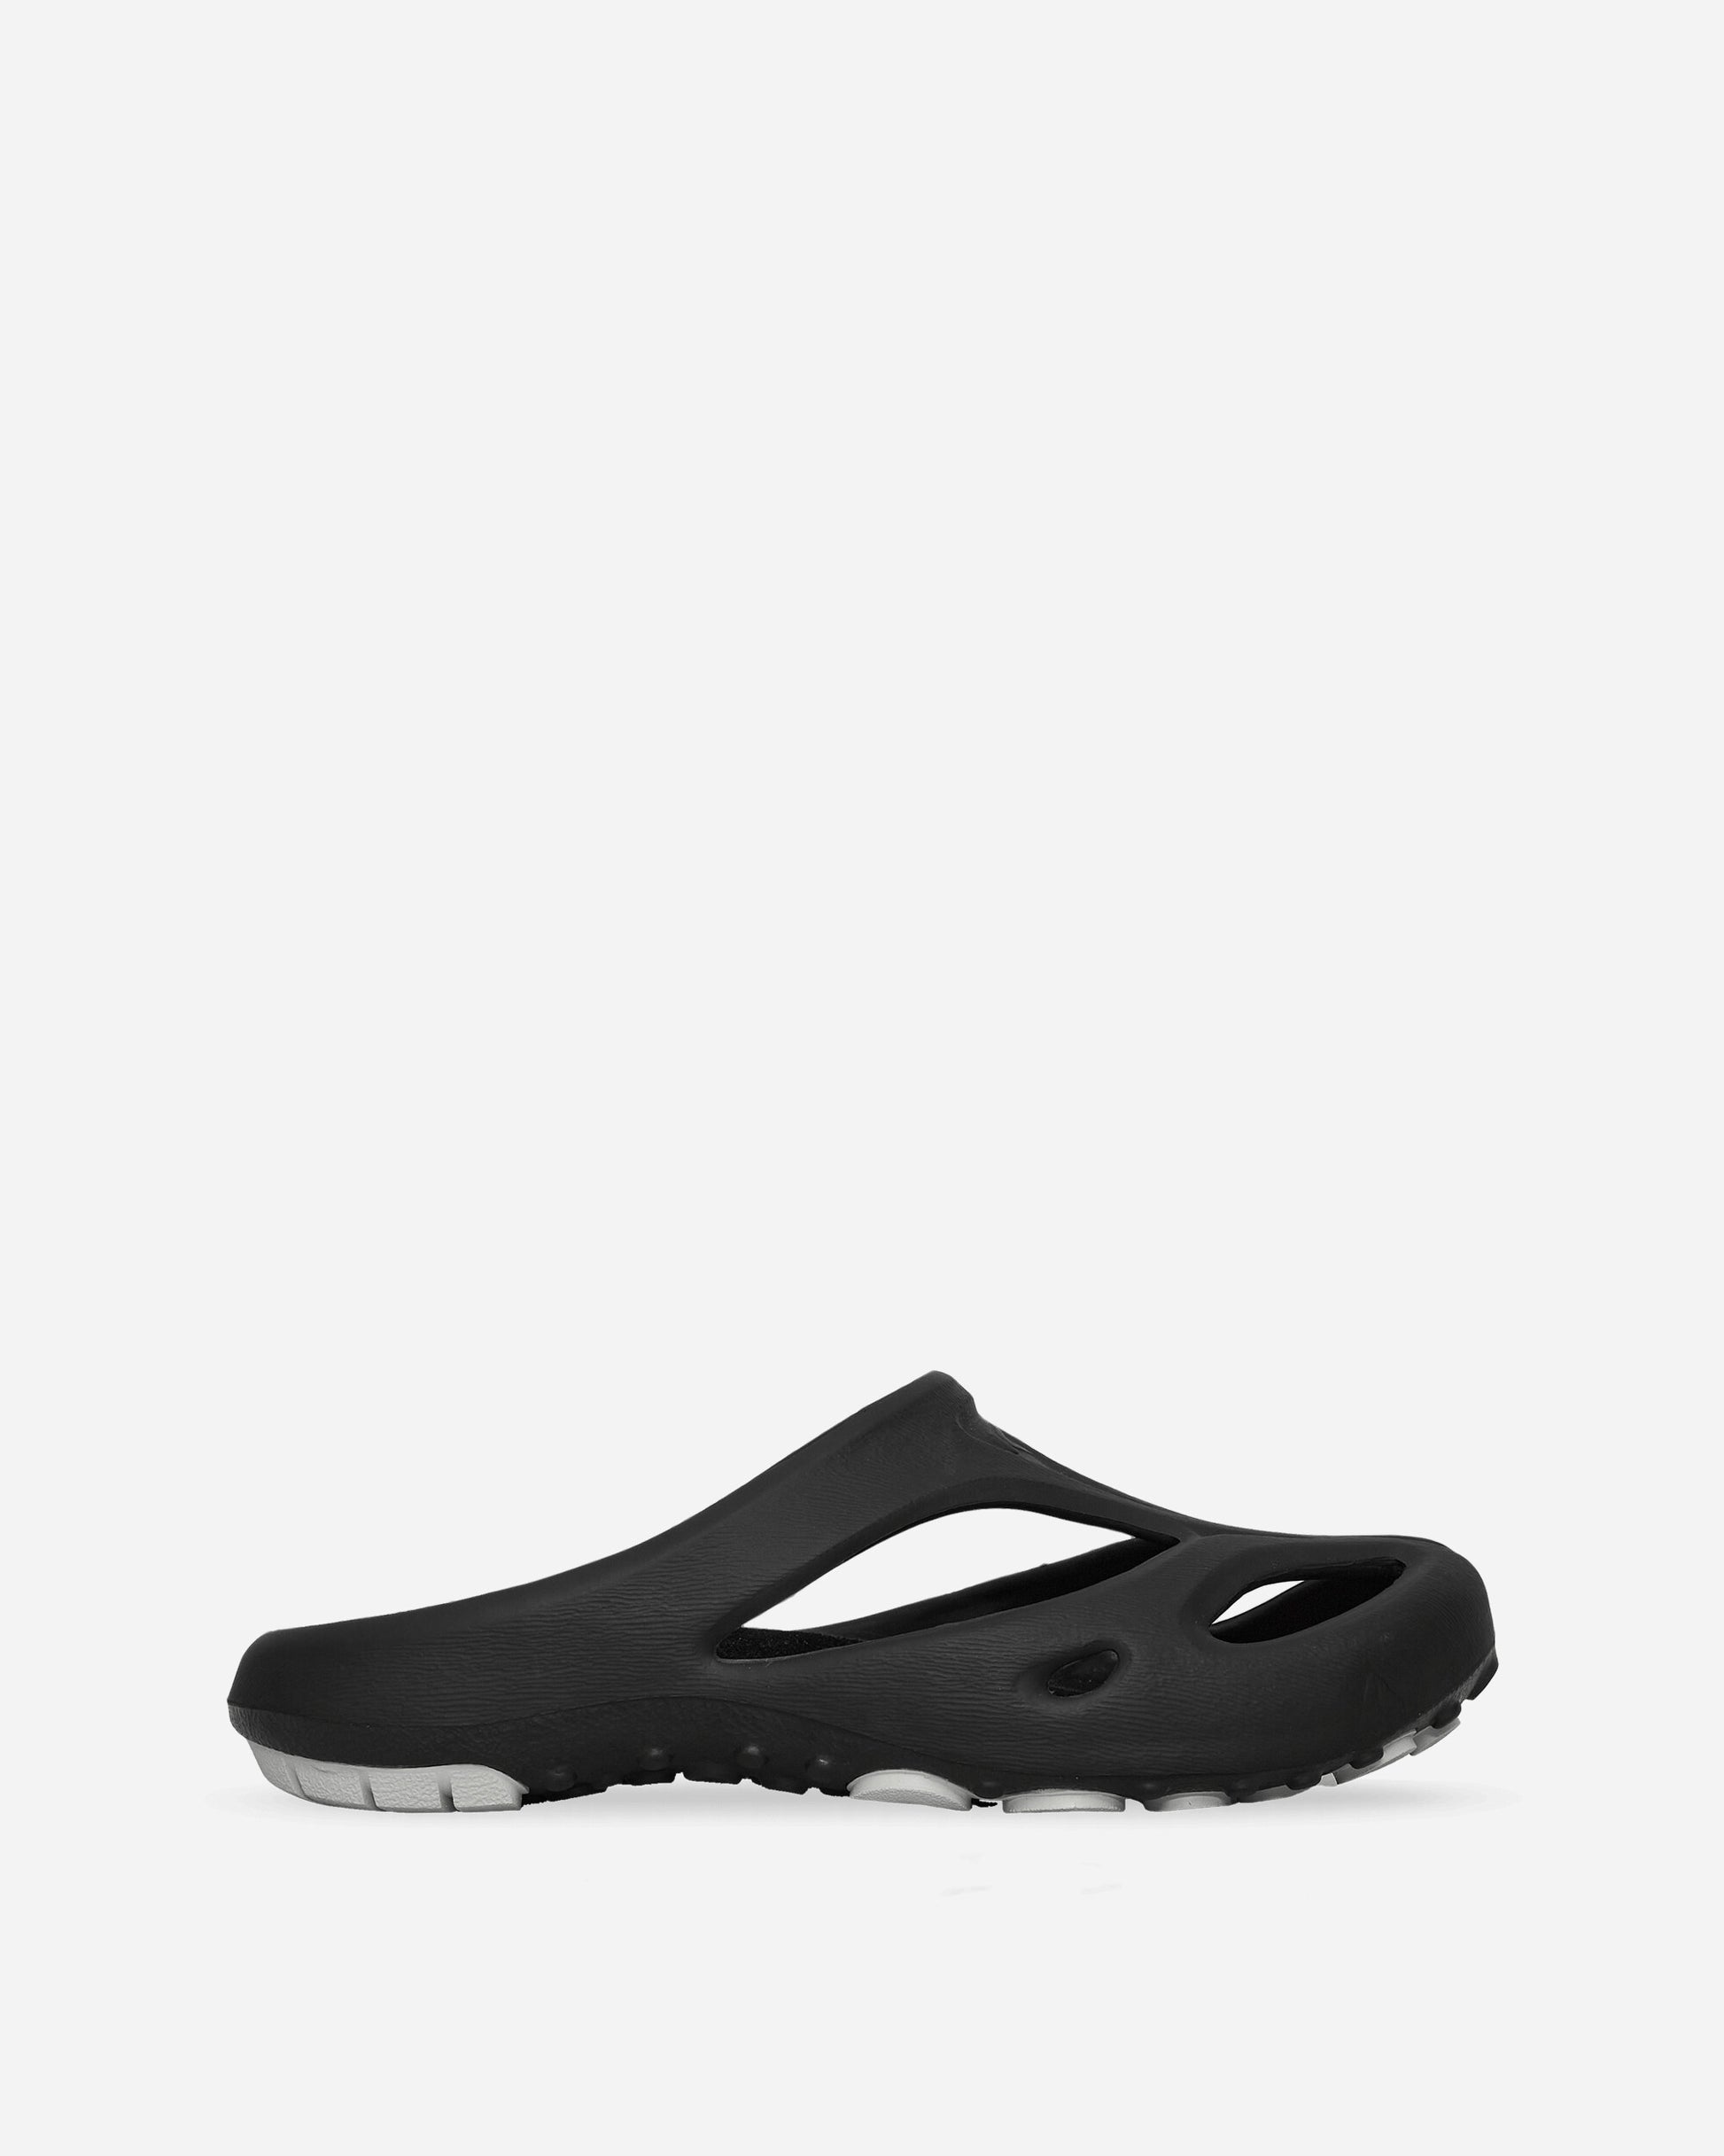 Keen Shanti Black/Dawn Blue Sandals and Slides Slides 1018206 001